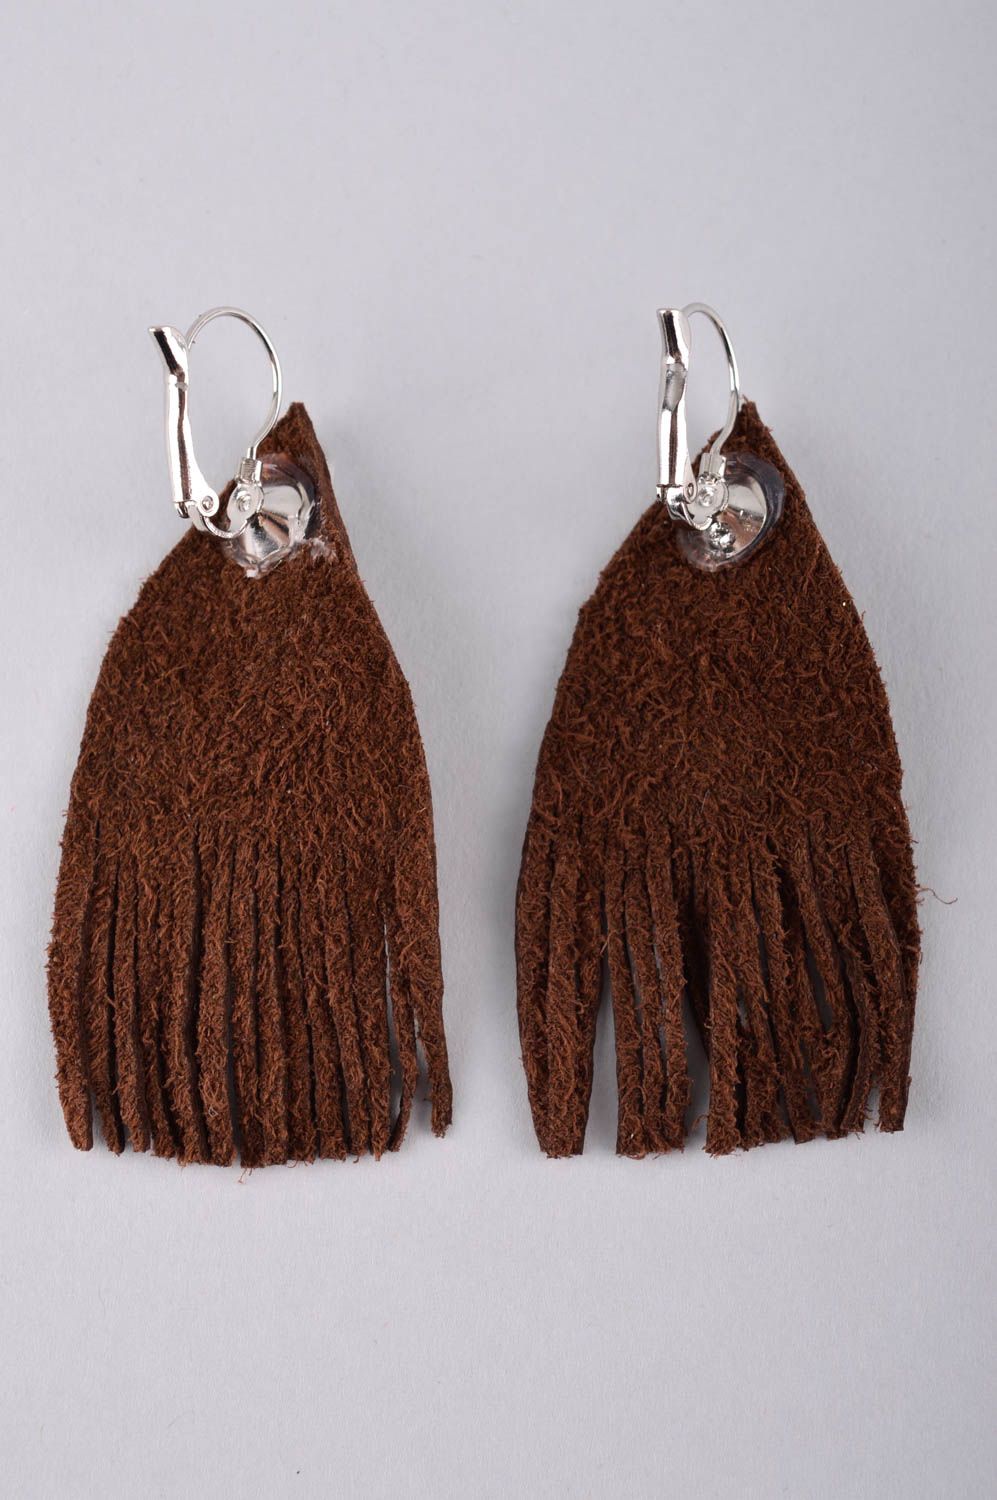 Handmade earrings leather earrings designer accessory unusual jewelry gift ideas photo 4